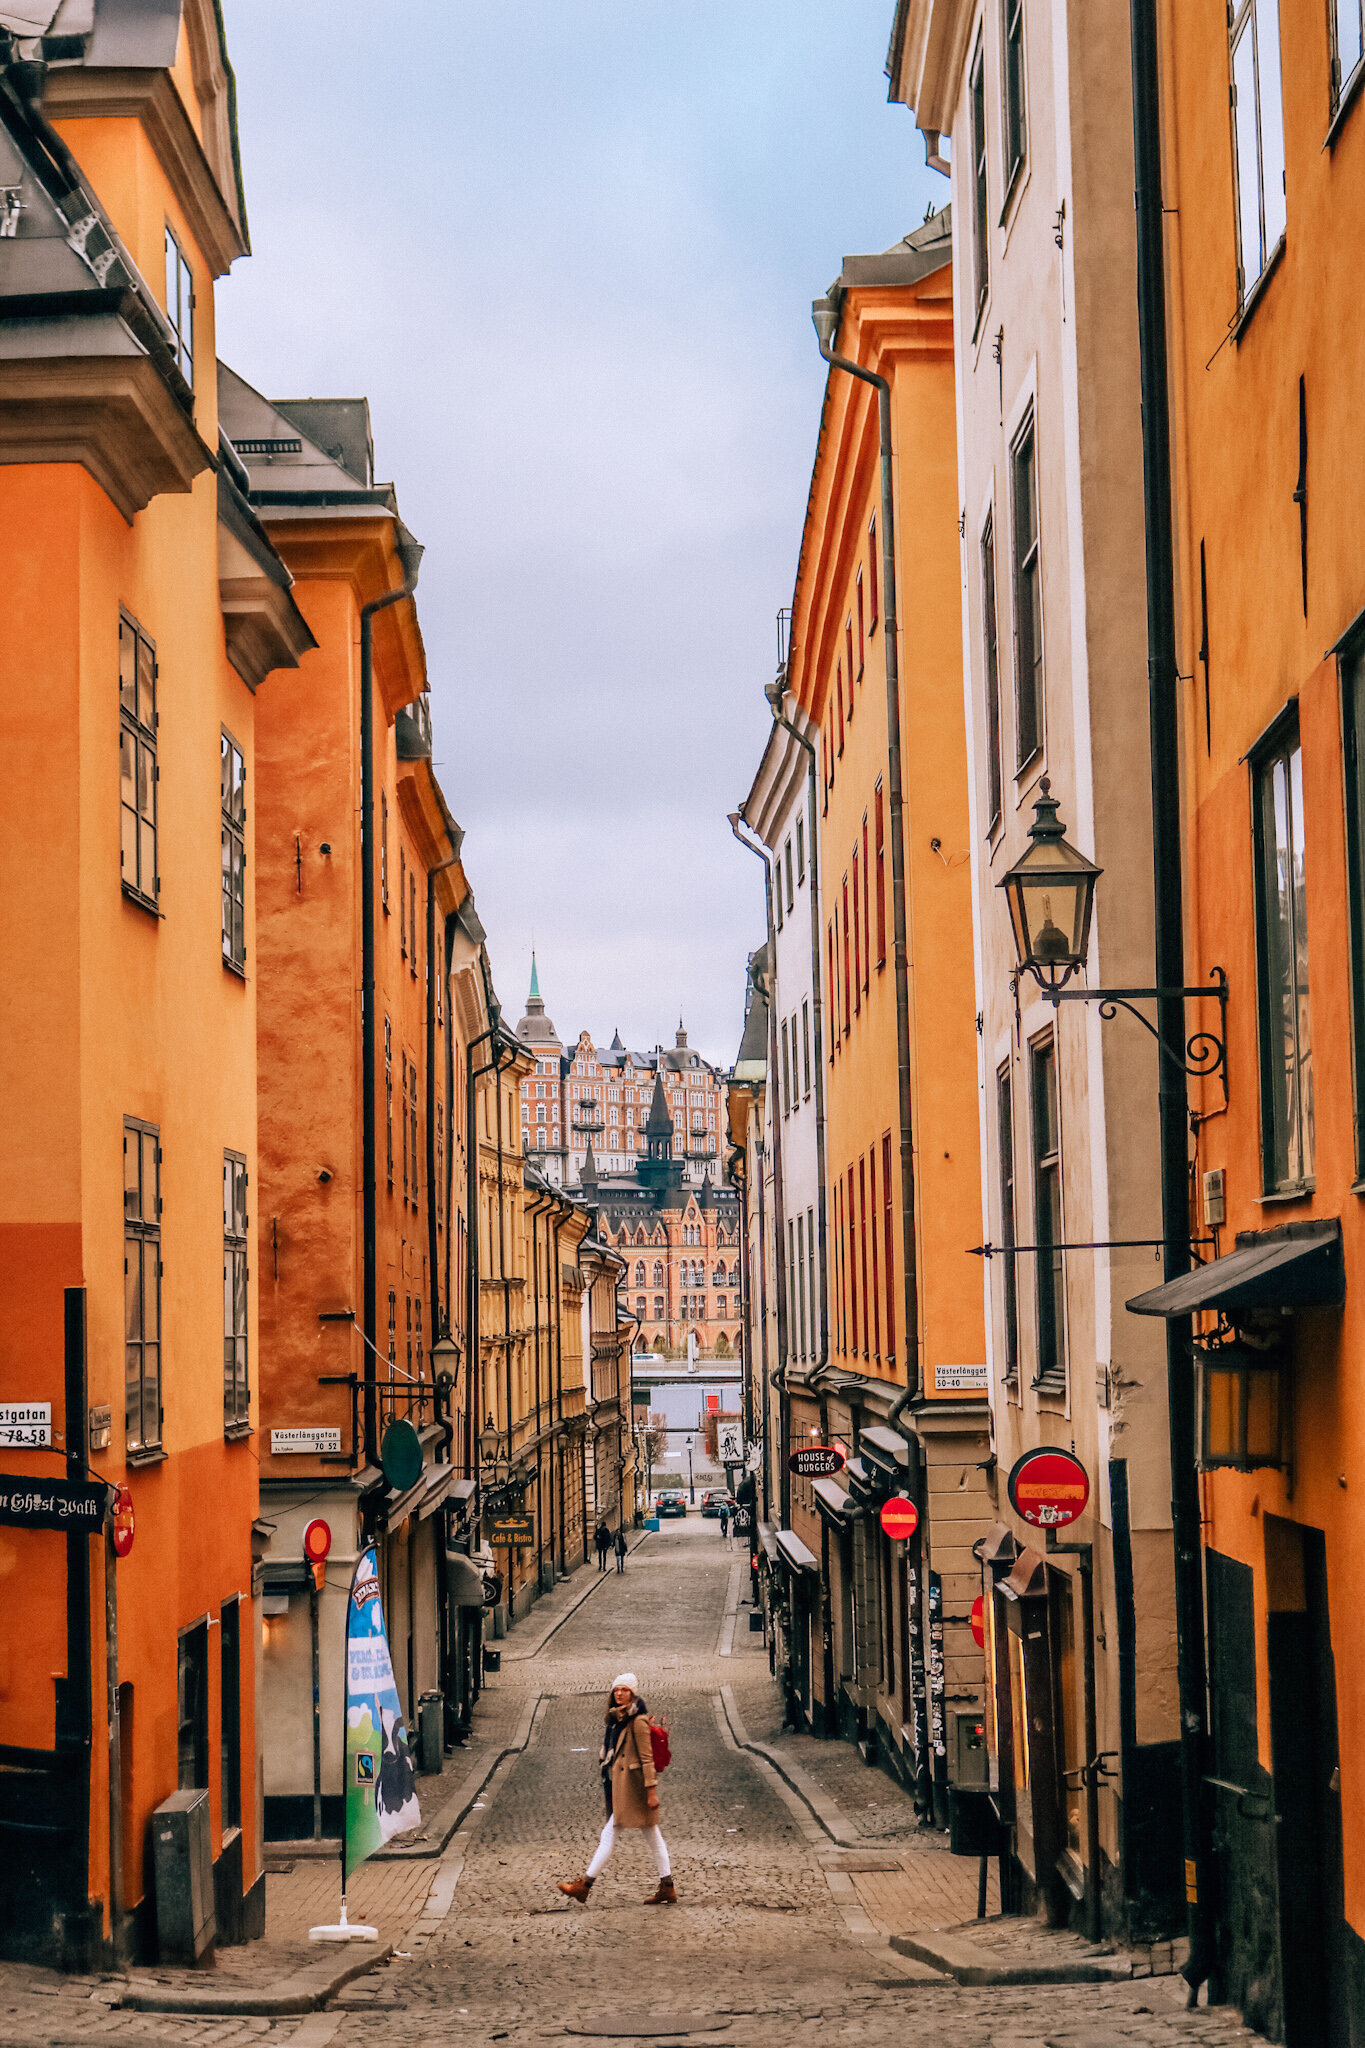 Stockholm Instagram Photo Locations - 